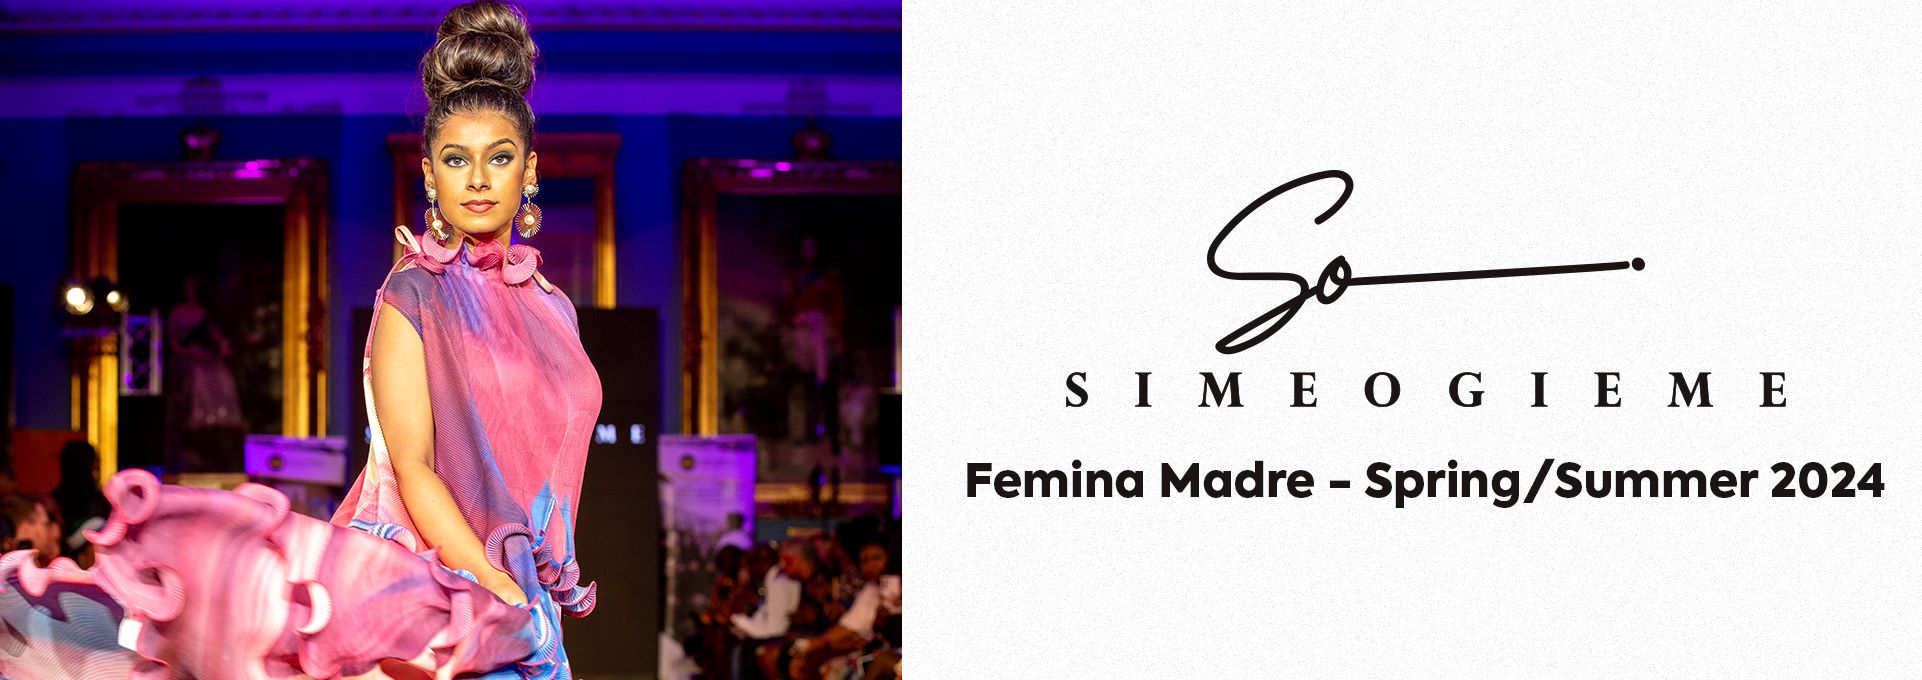 Simeogieme Unveils “Femina Madre” SS’24 At Africa Fashion Week London 2023